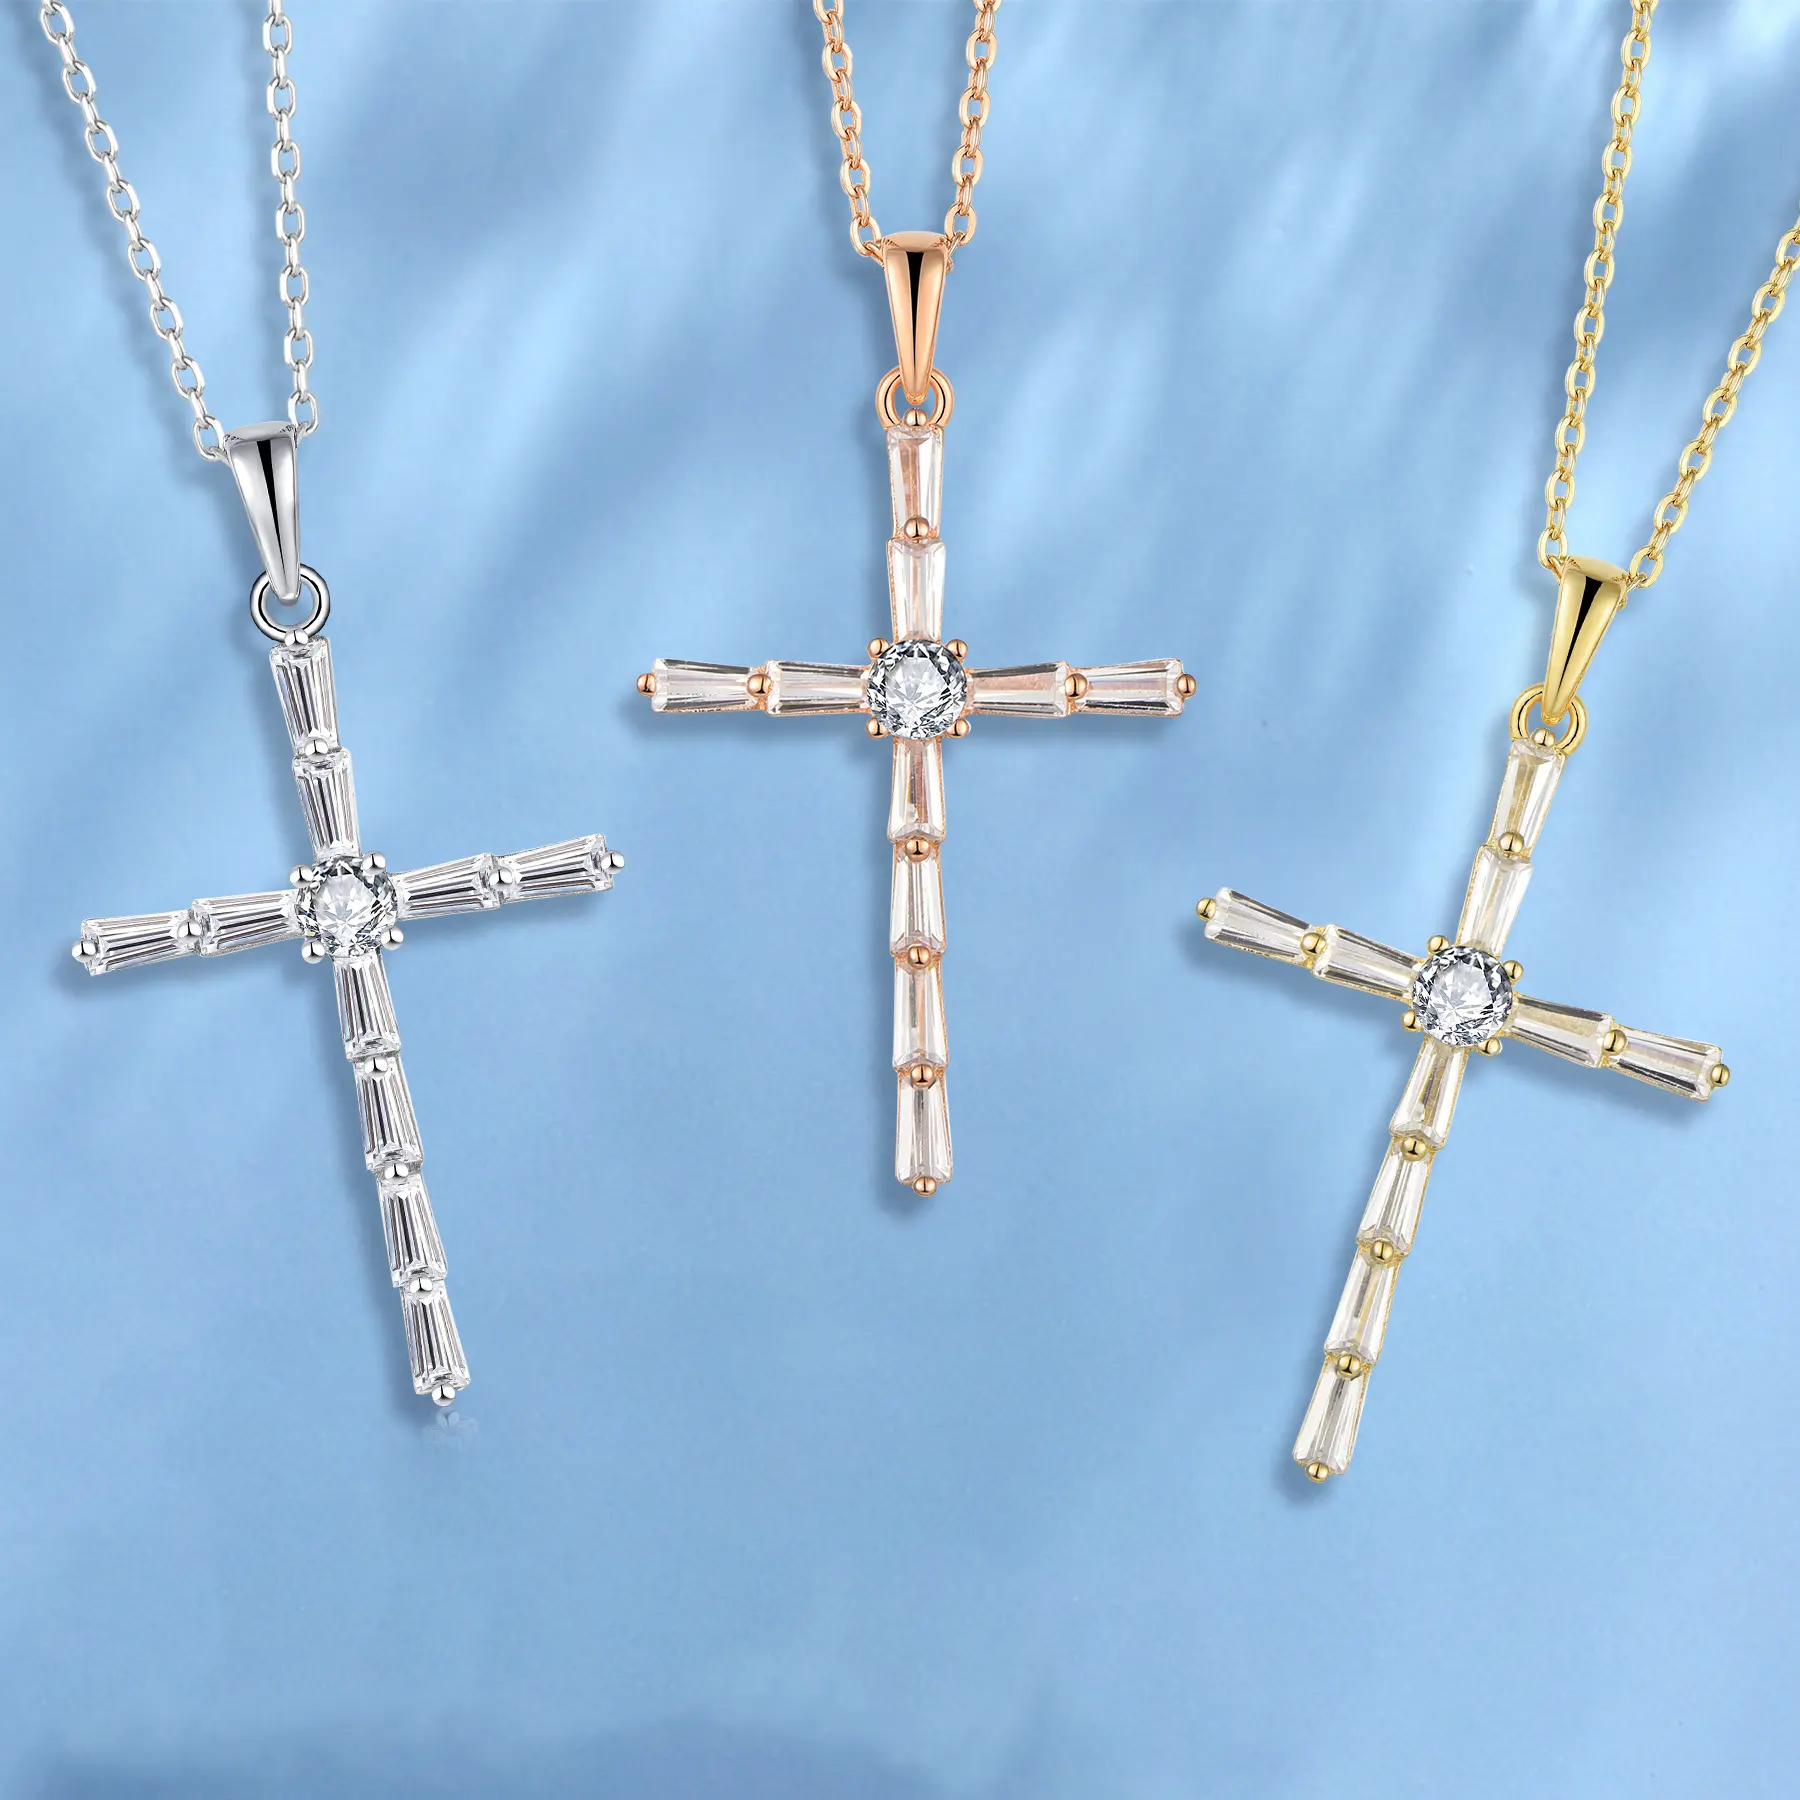 Jewel Small Baguette Mini Choker Sterling Silver Necklaces Tarnish Free Diamond Pendant 925 Cross Necklace Of Jewelry Women